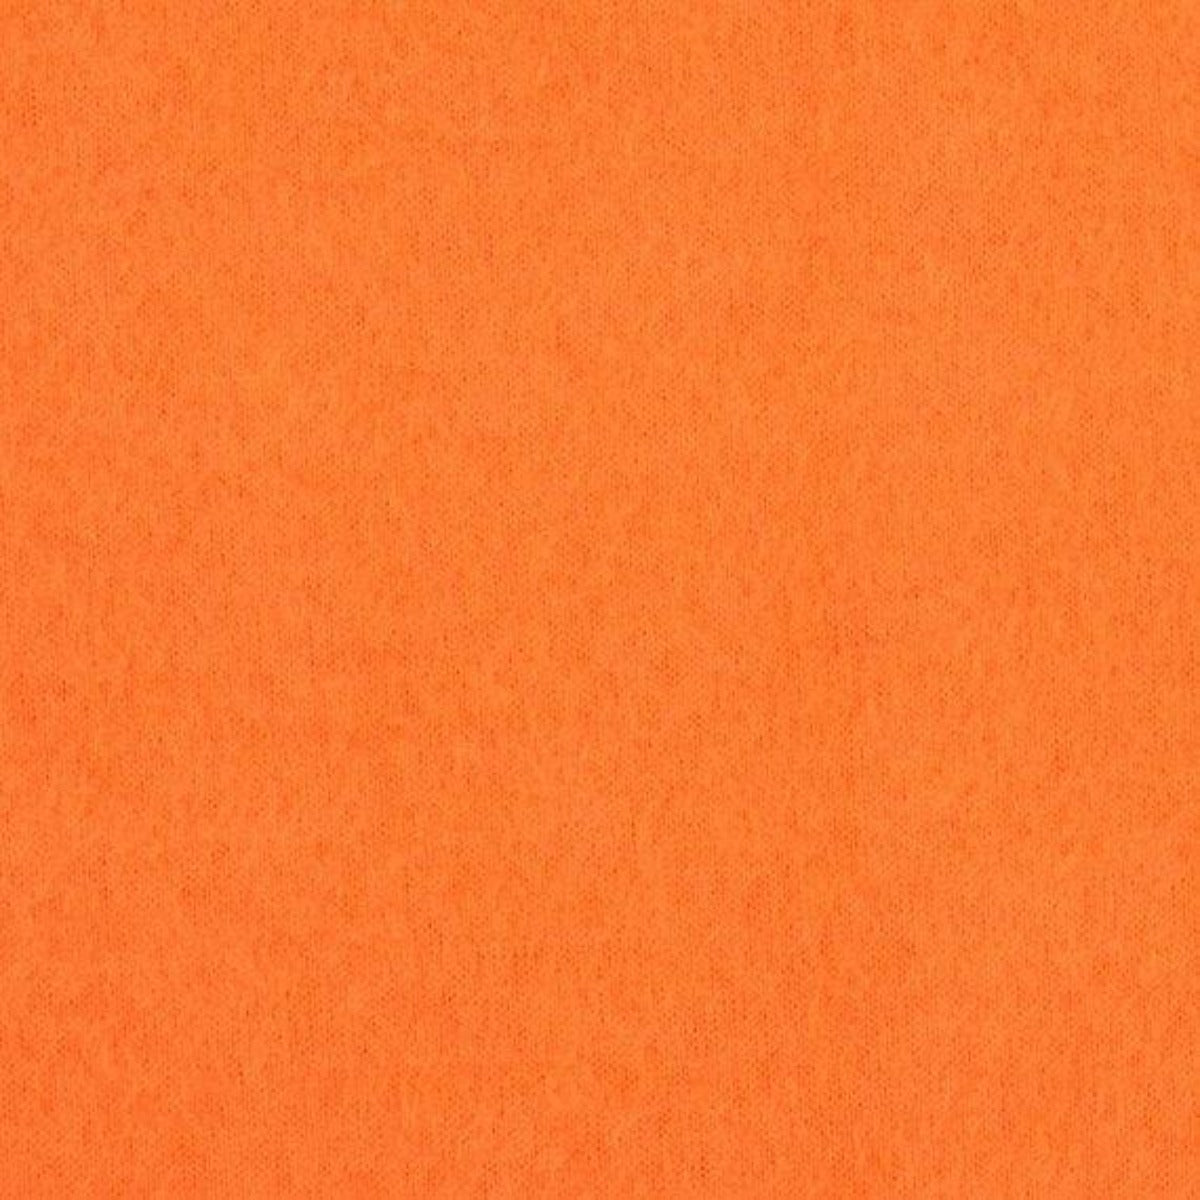 Orange Felt Fabric 